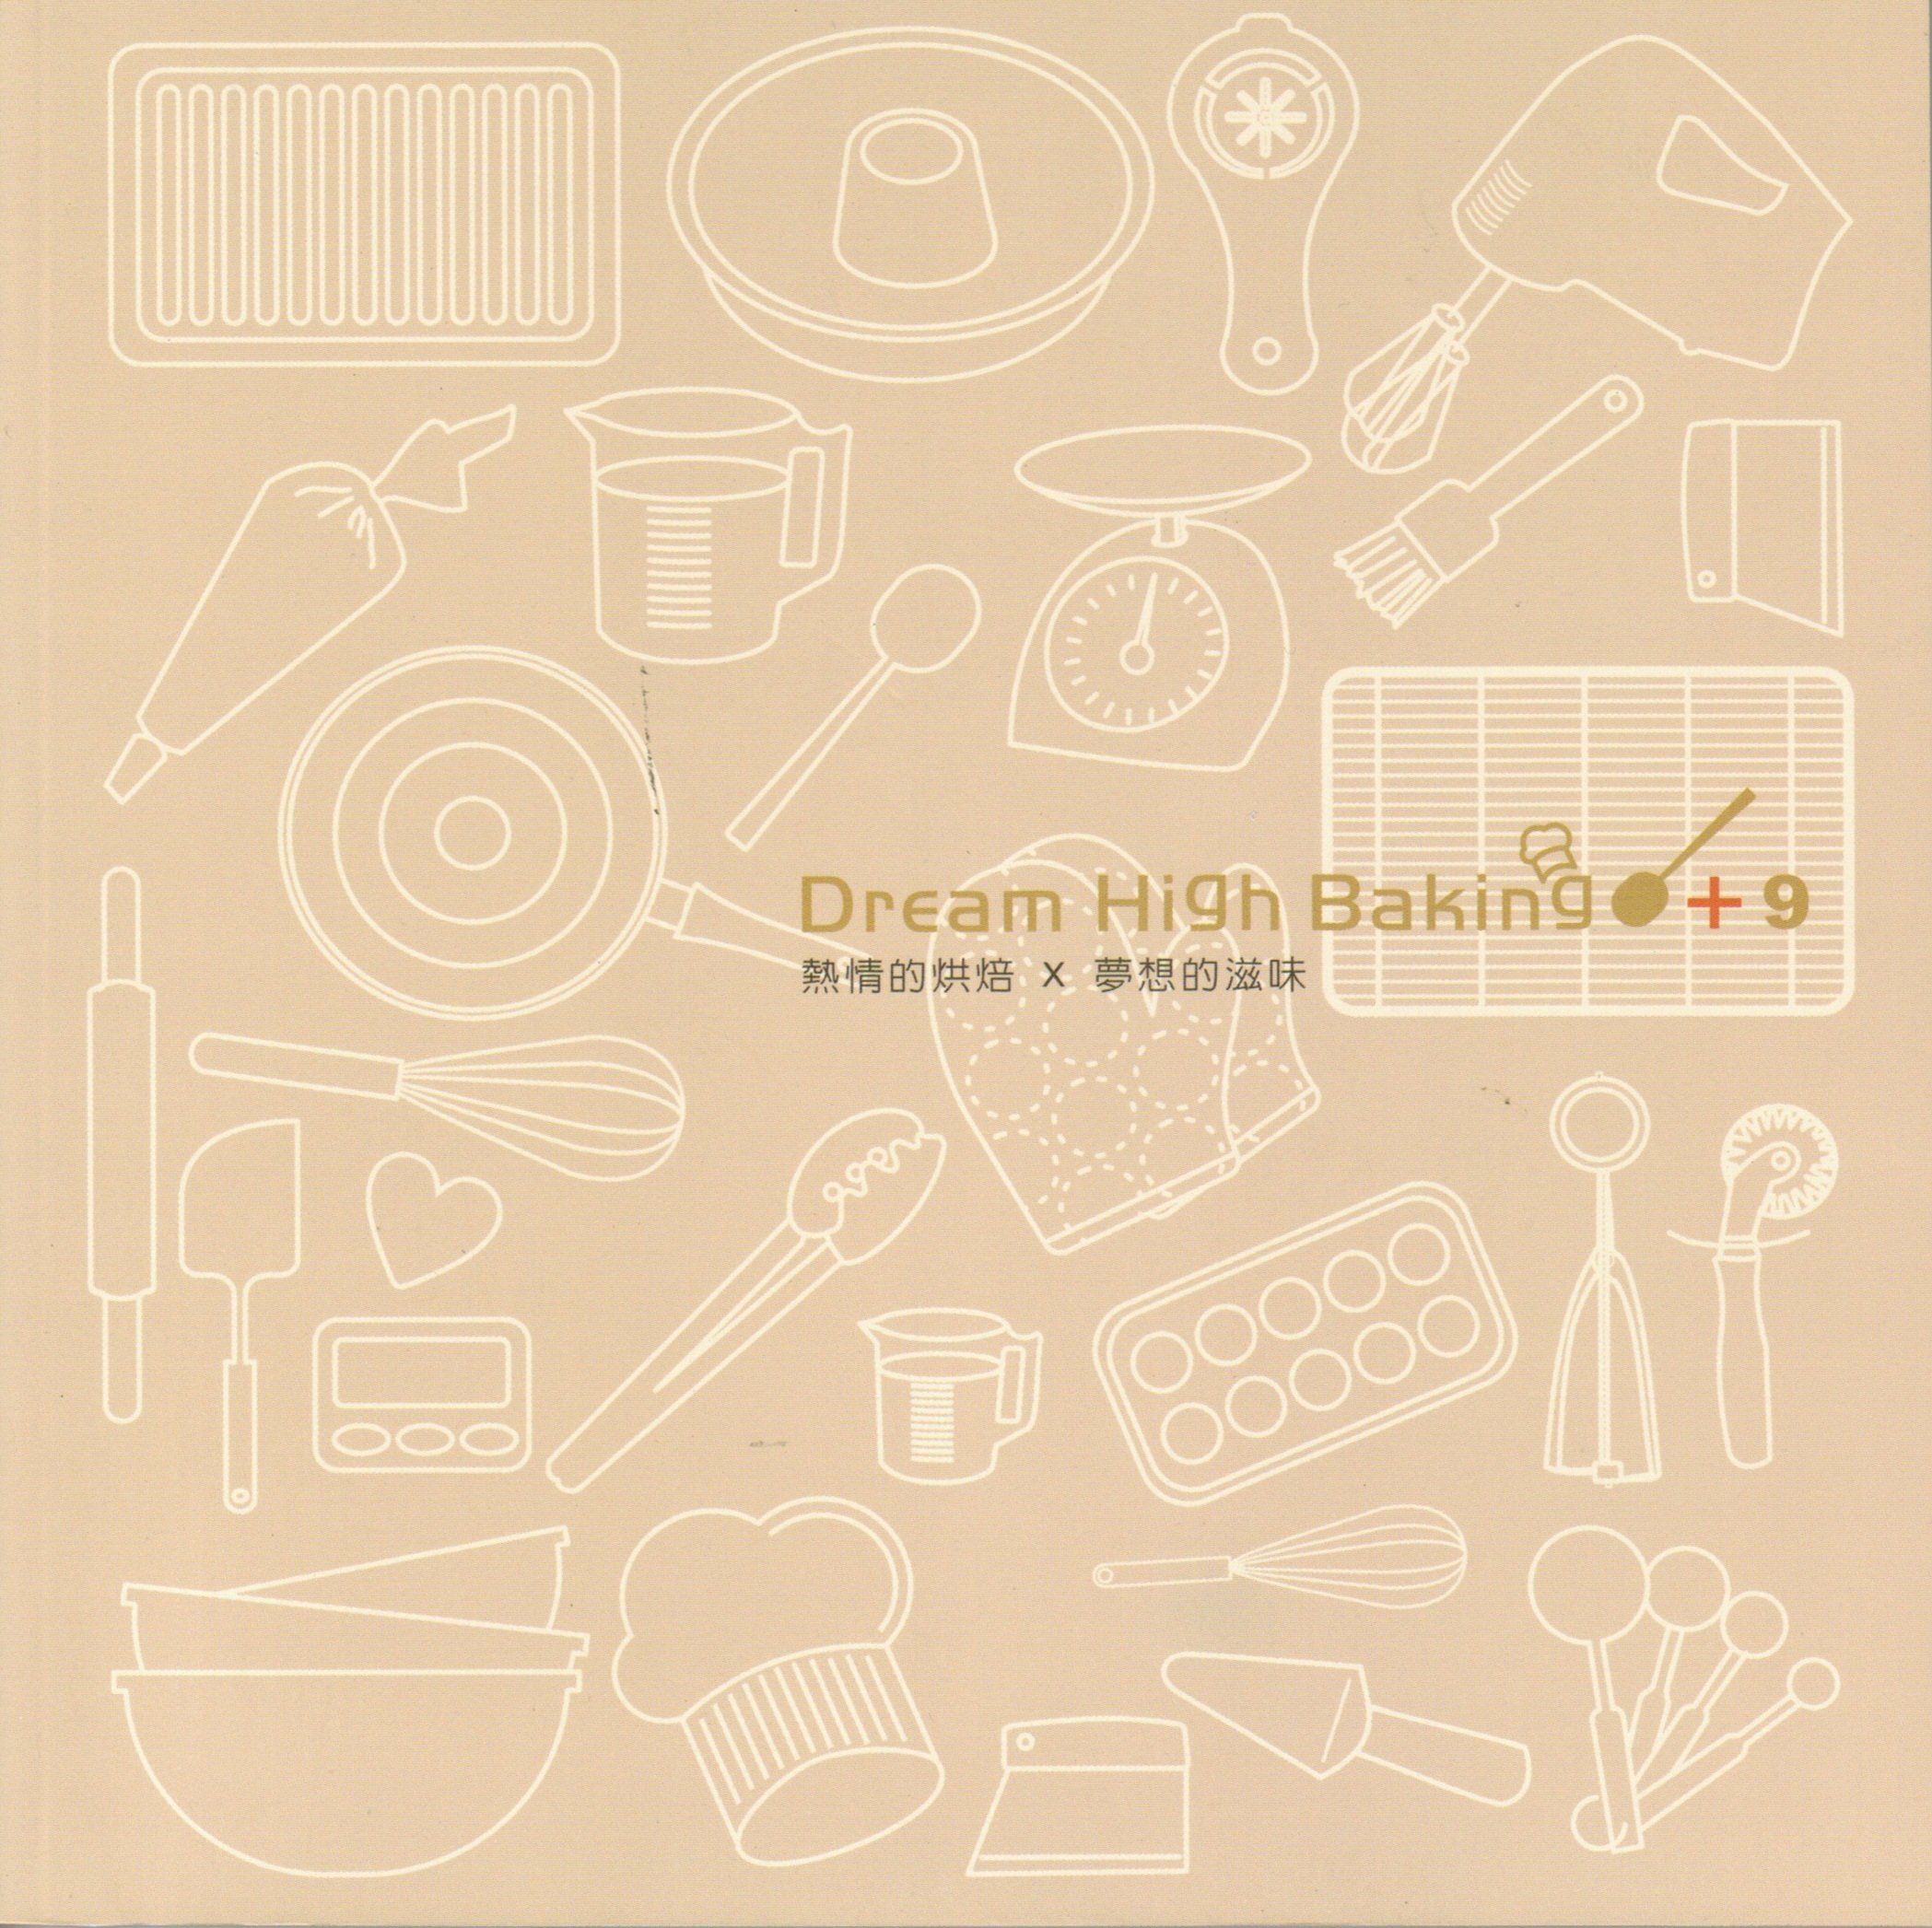 Dream High Baking(作者：陳建龍)